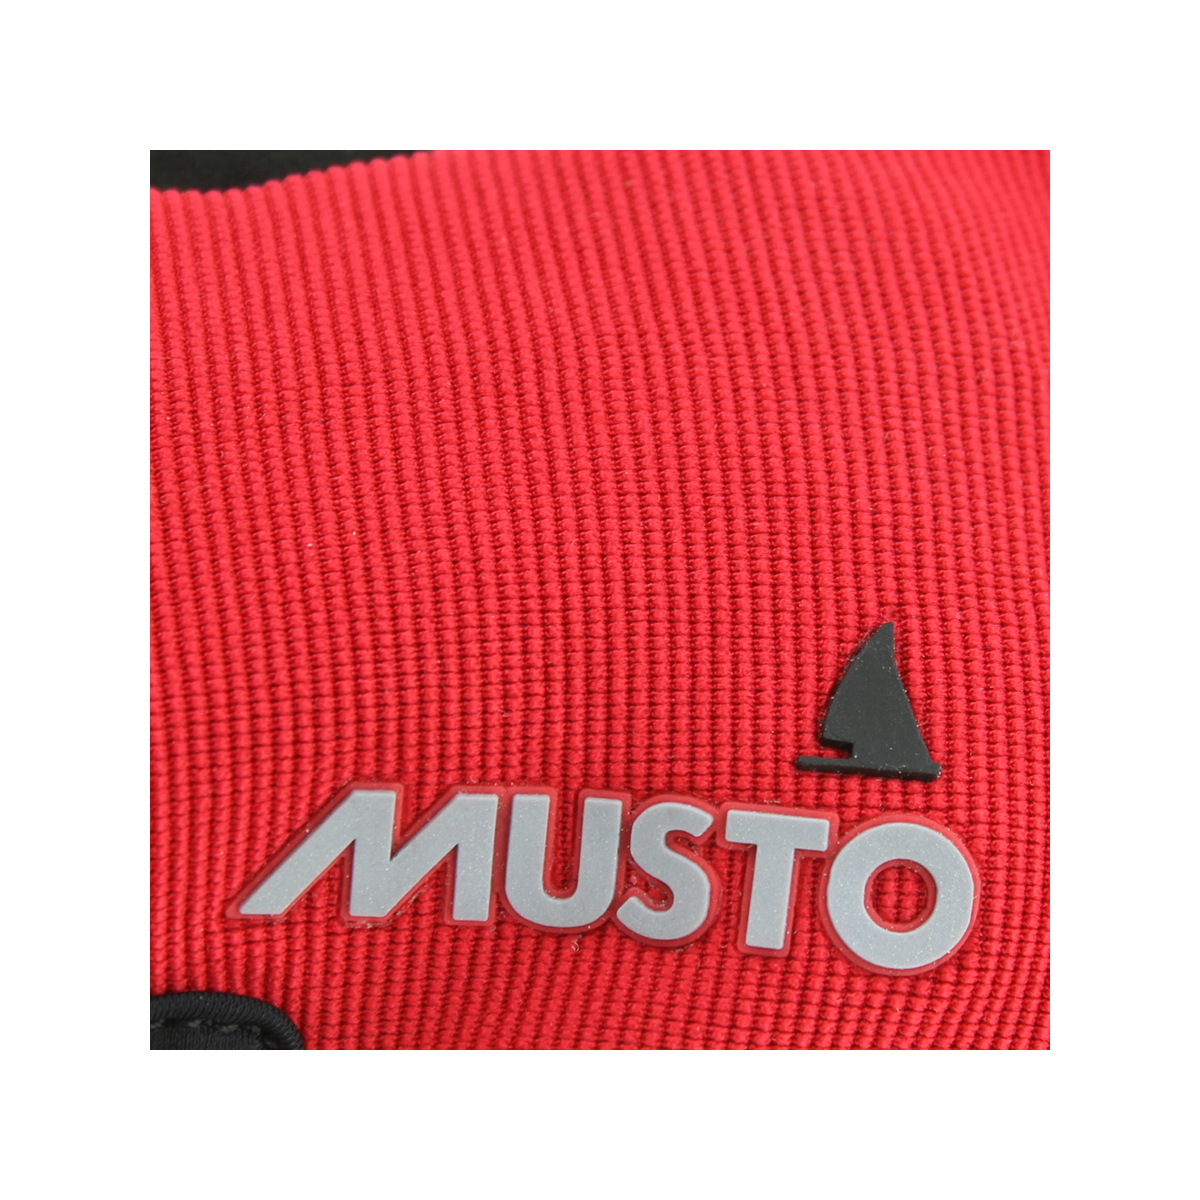 Musto Essential gants de voile longs doigts rouge, taille M